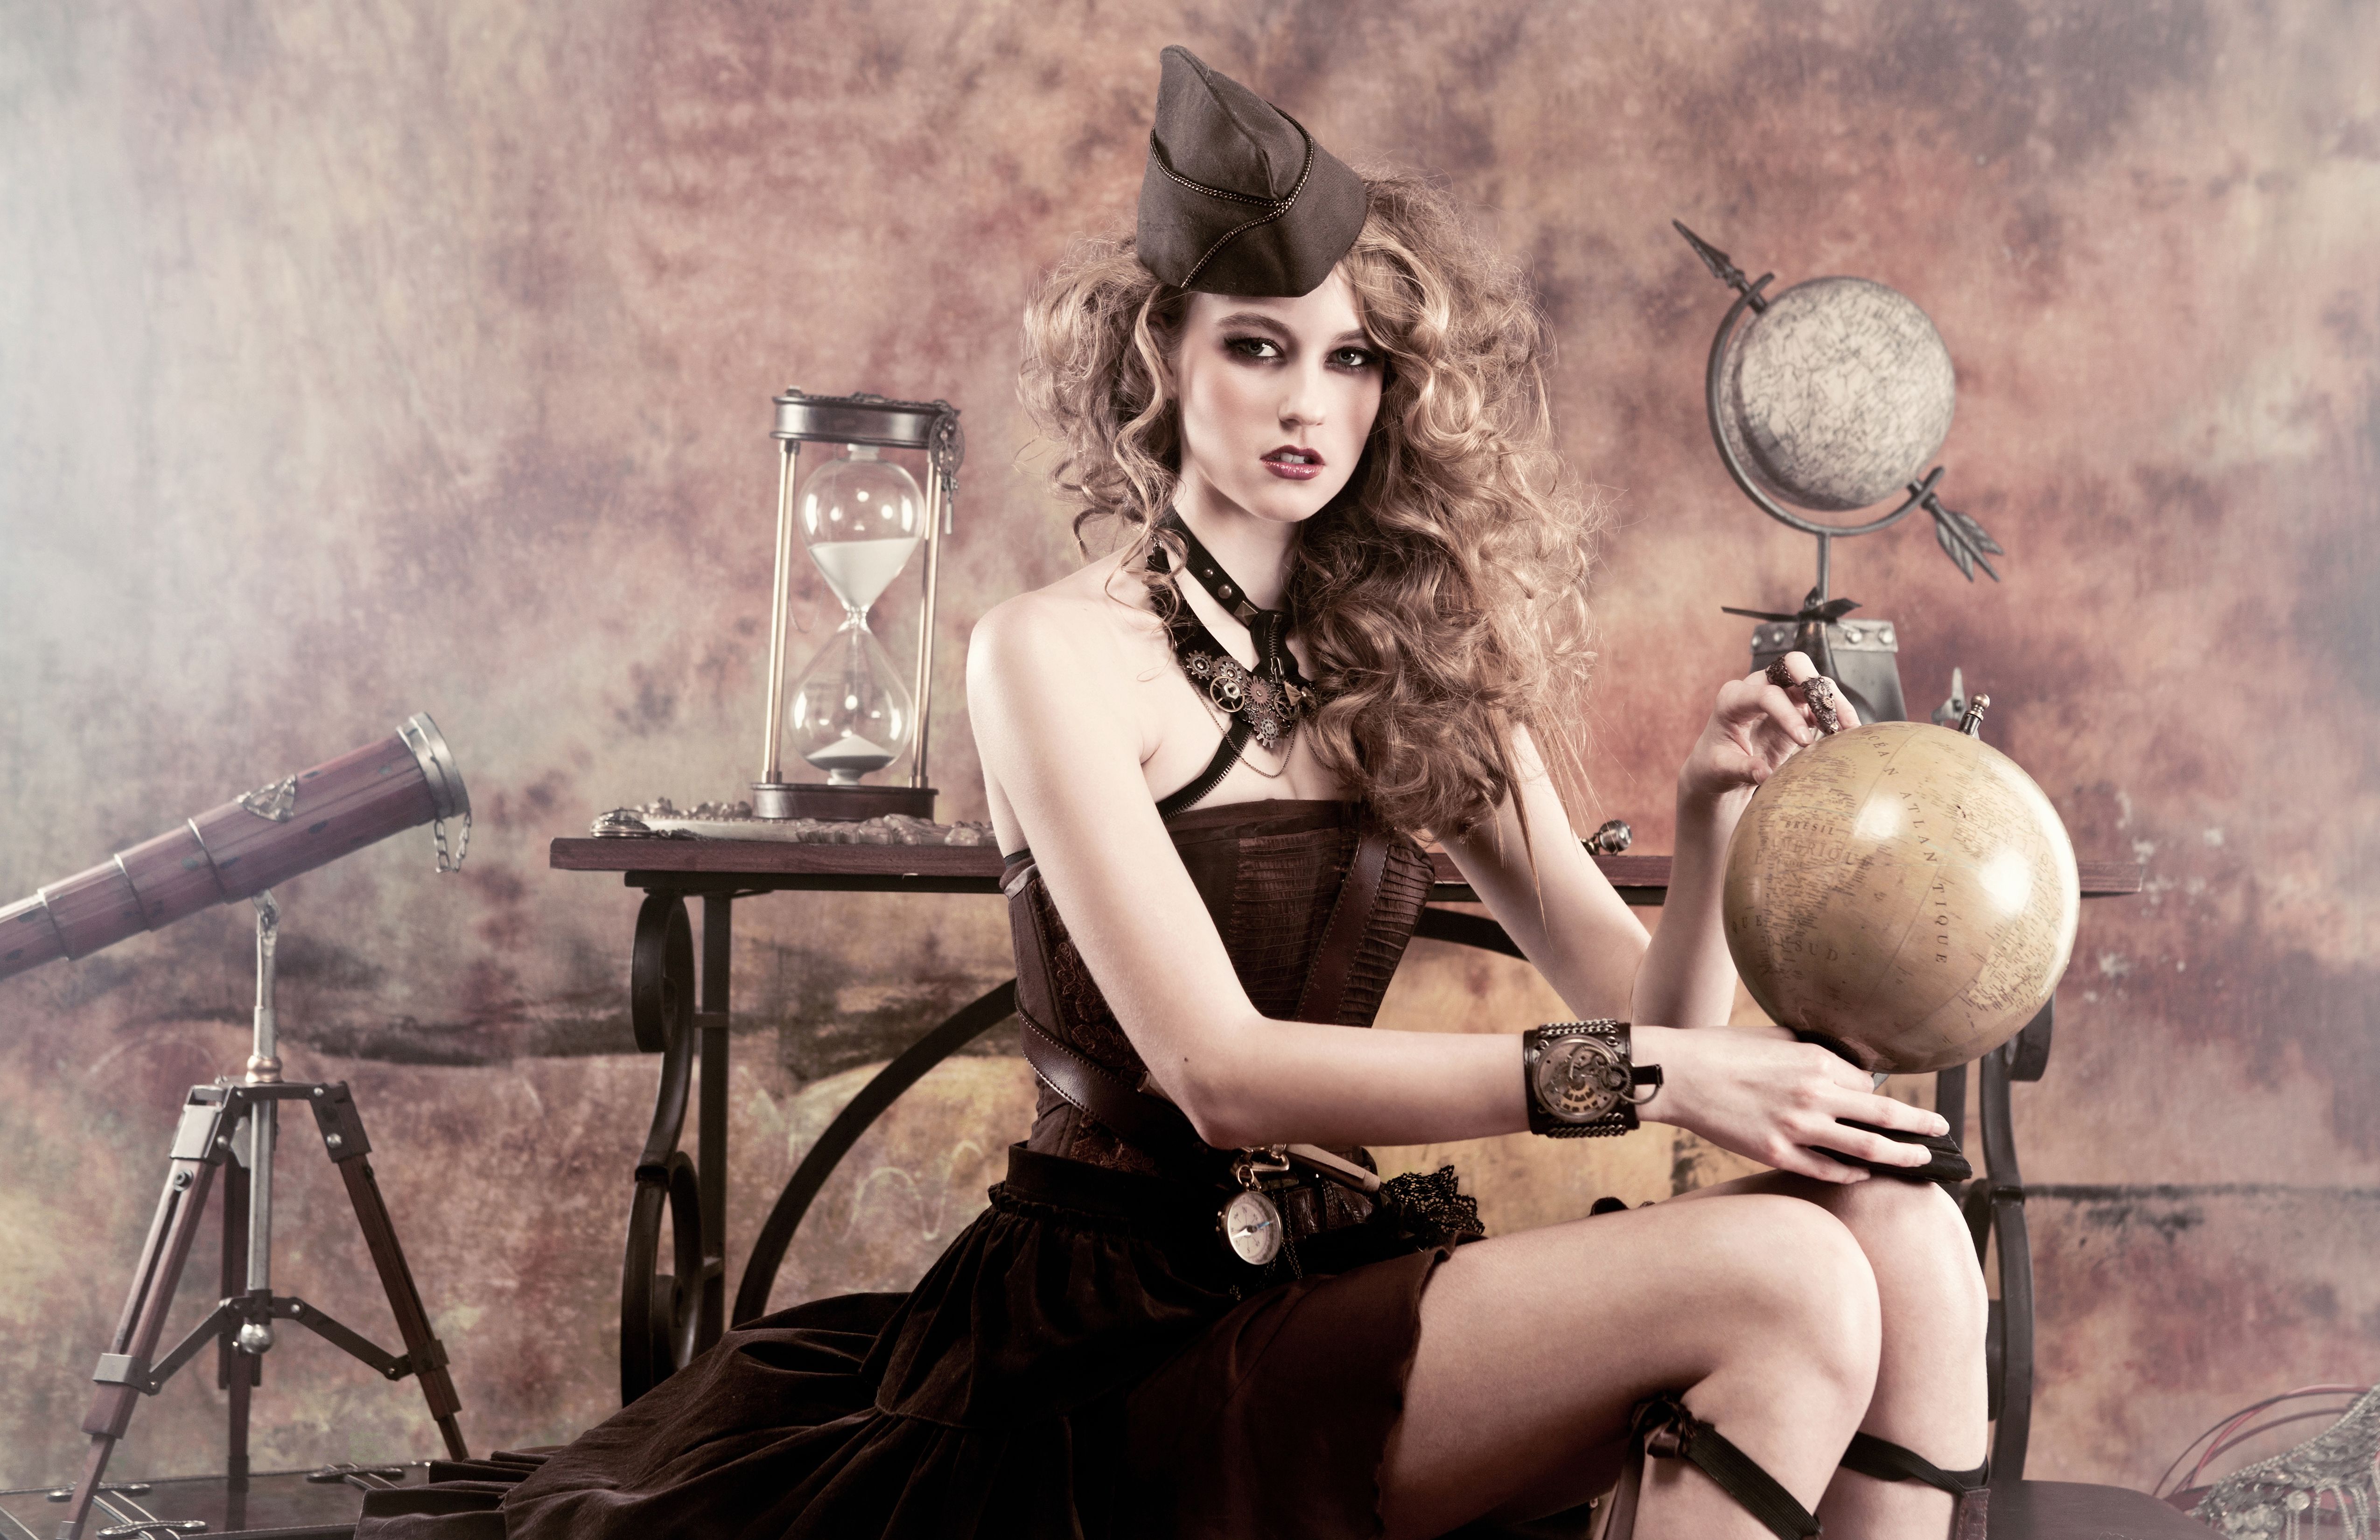 A steampunk woman holding a globe - Steampunk